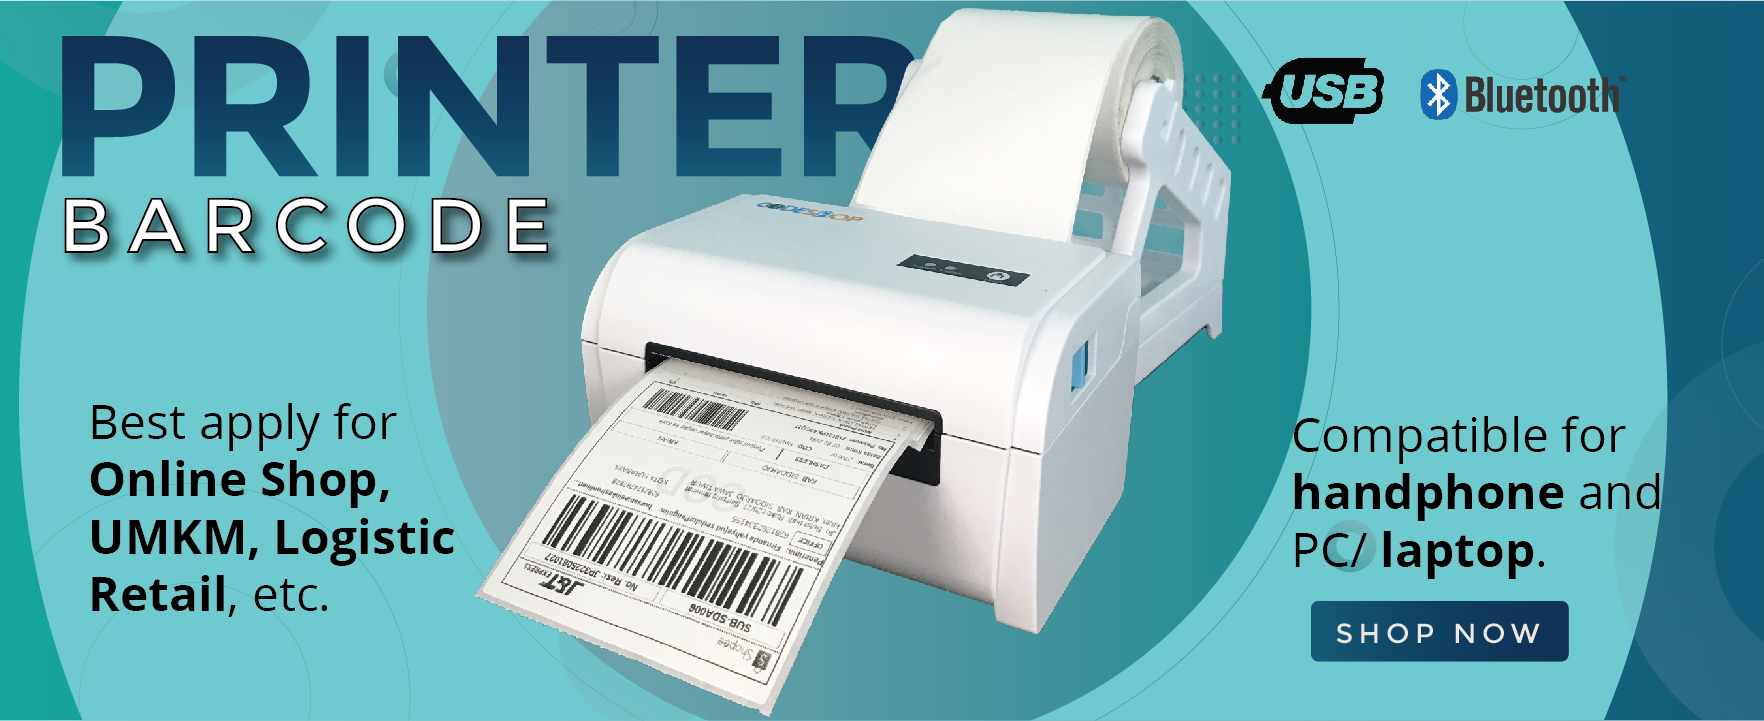 printer-barcode-resi-bluetooth-codeshop-cb-160bt